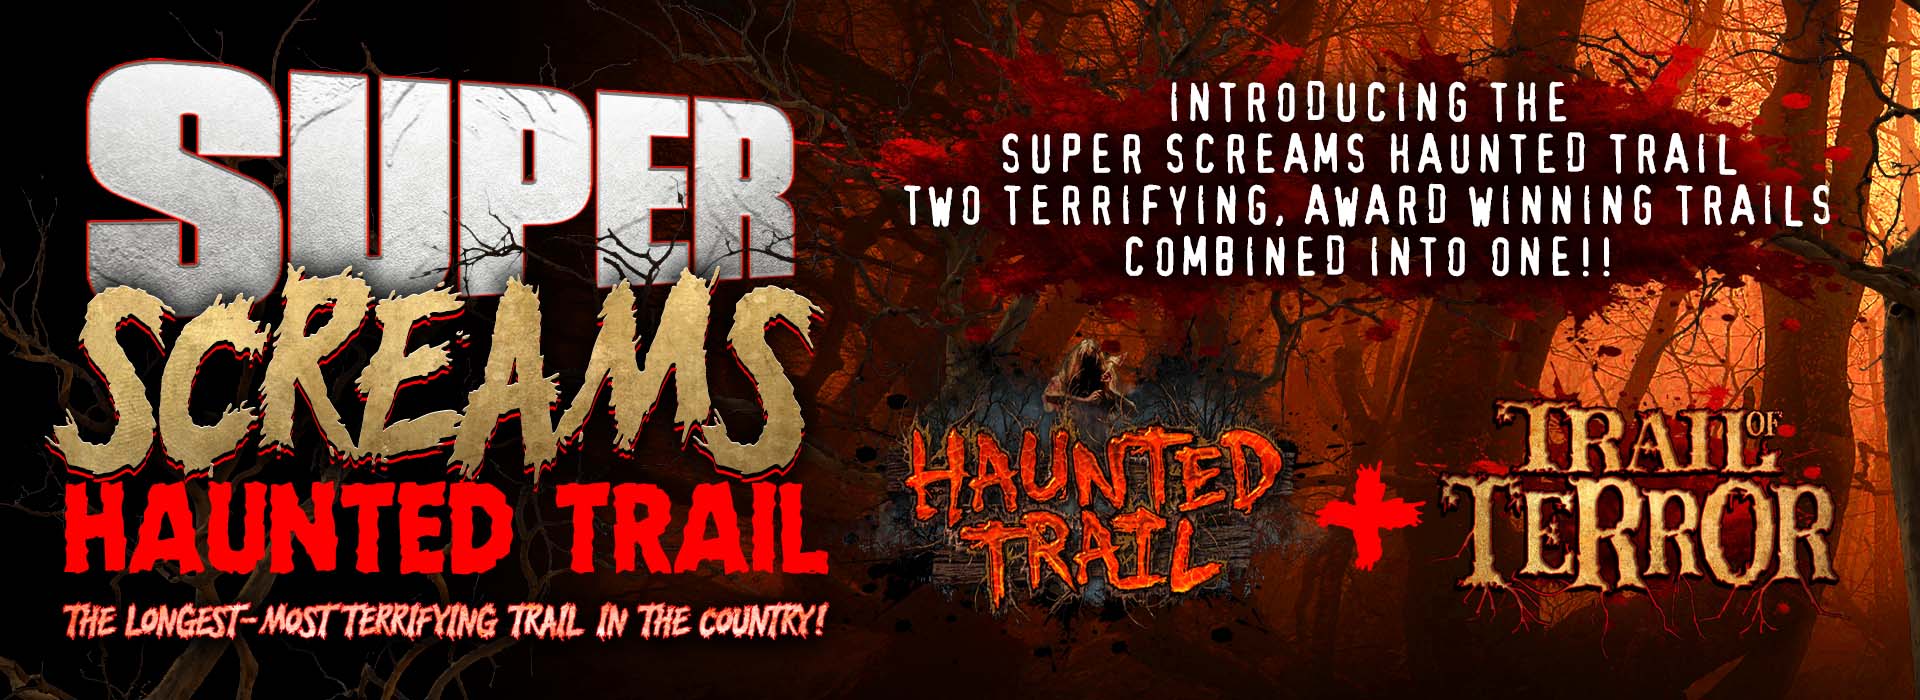 Super Screams Haunted Trail